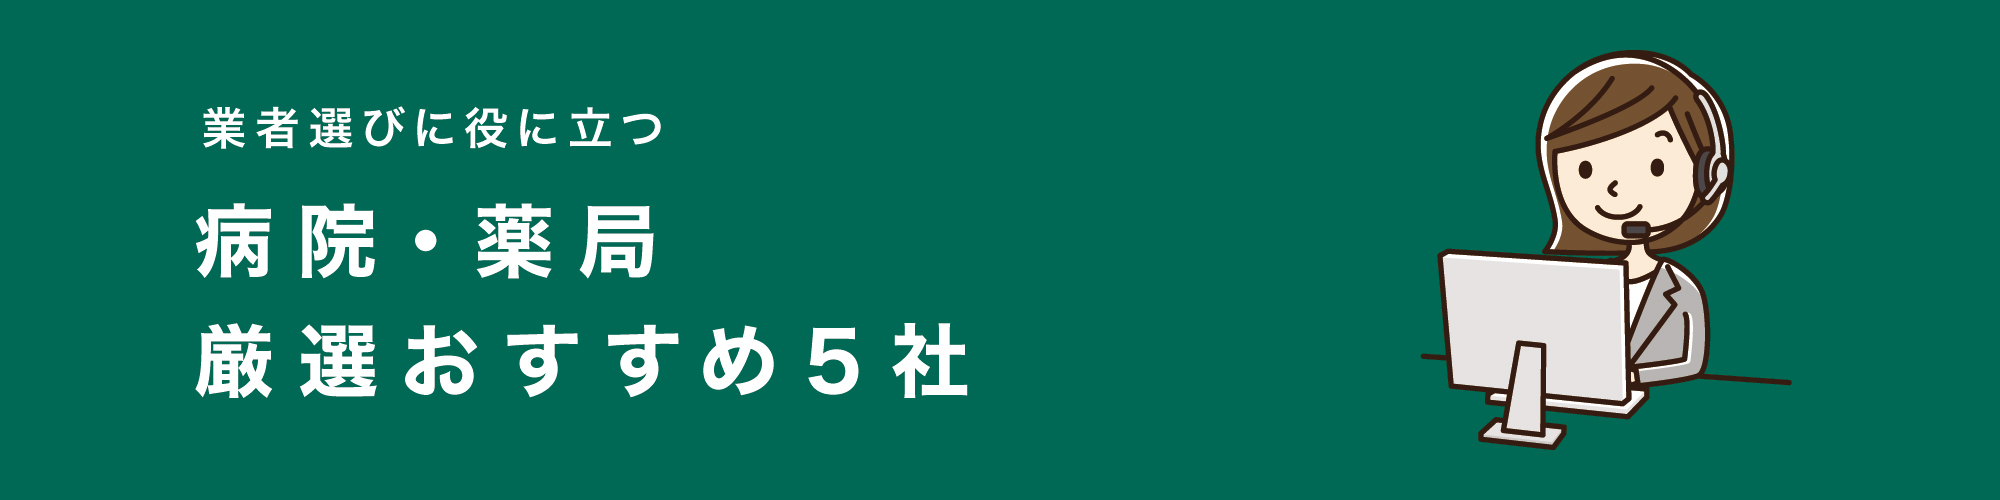 I5